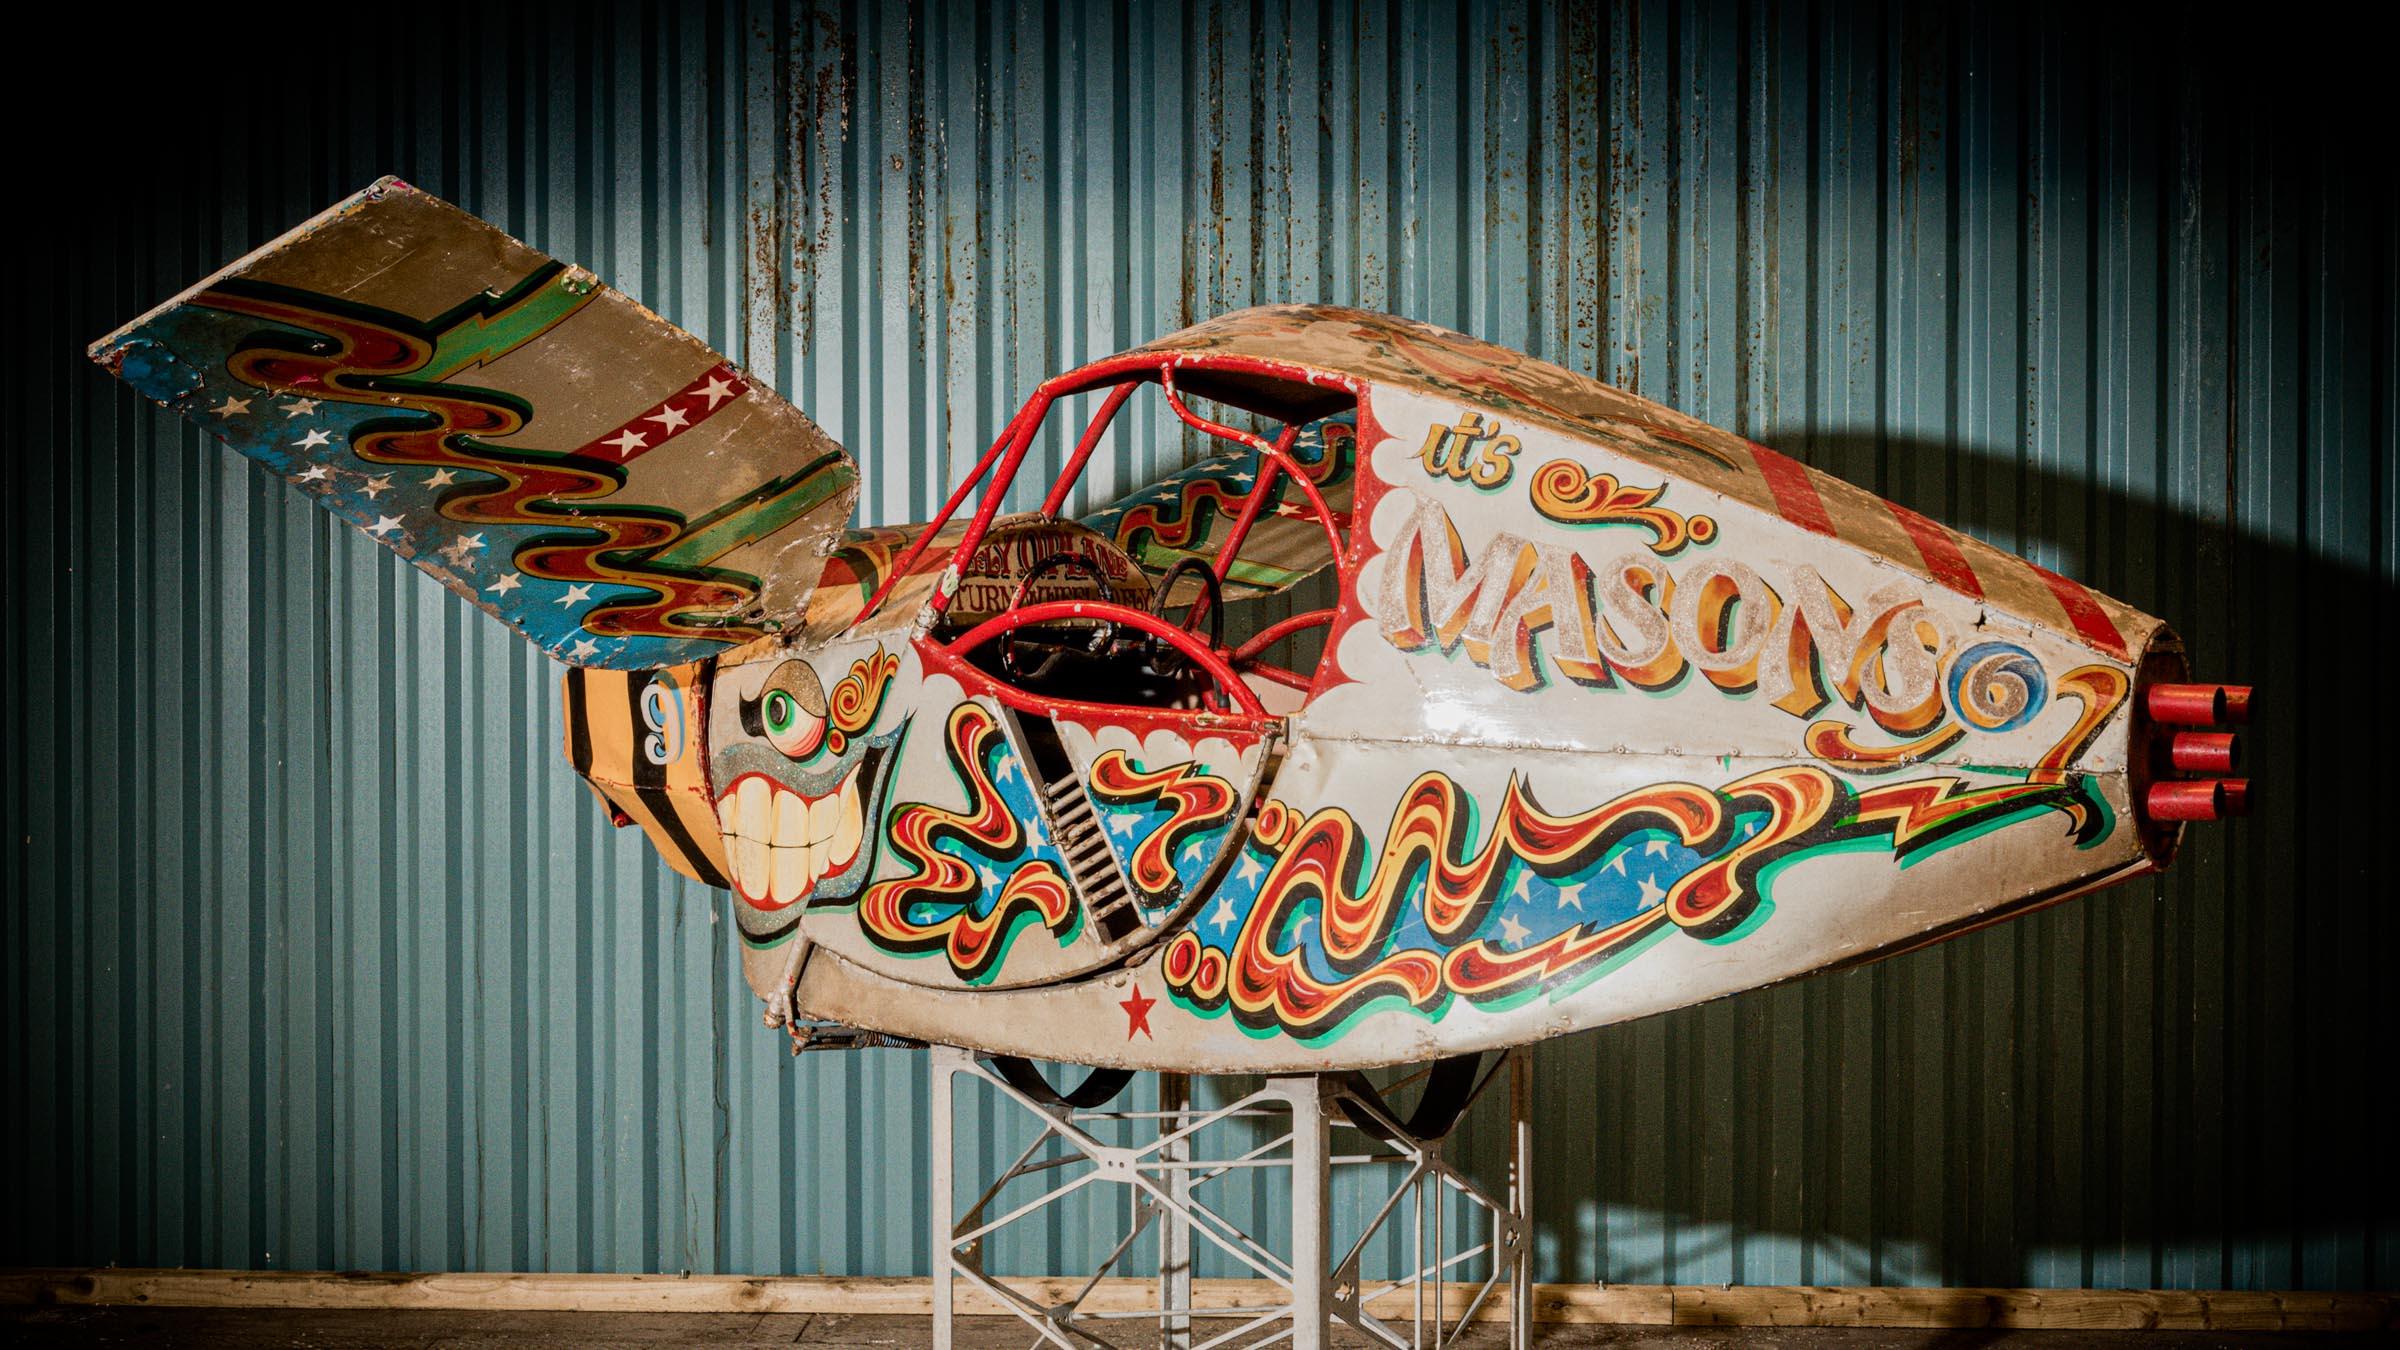 Painted Masons Fly O Plane Number ‘9 - Danny Boy’, English Fairground Ride